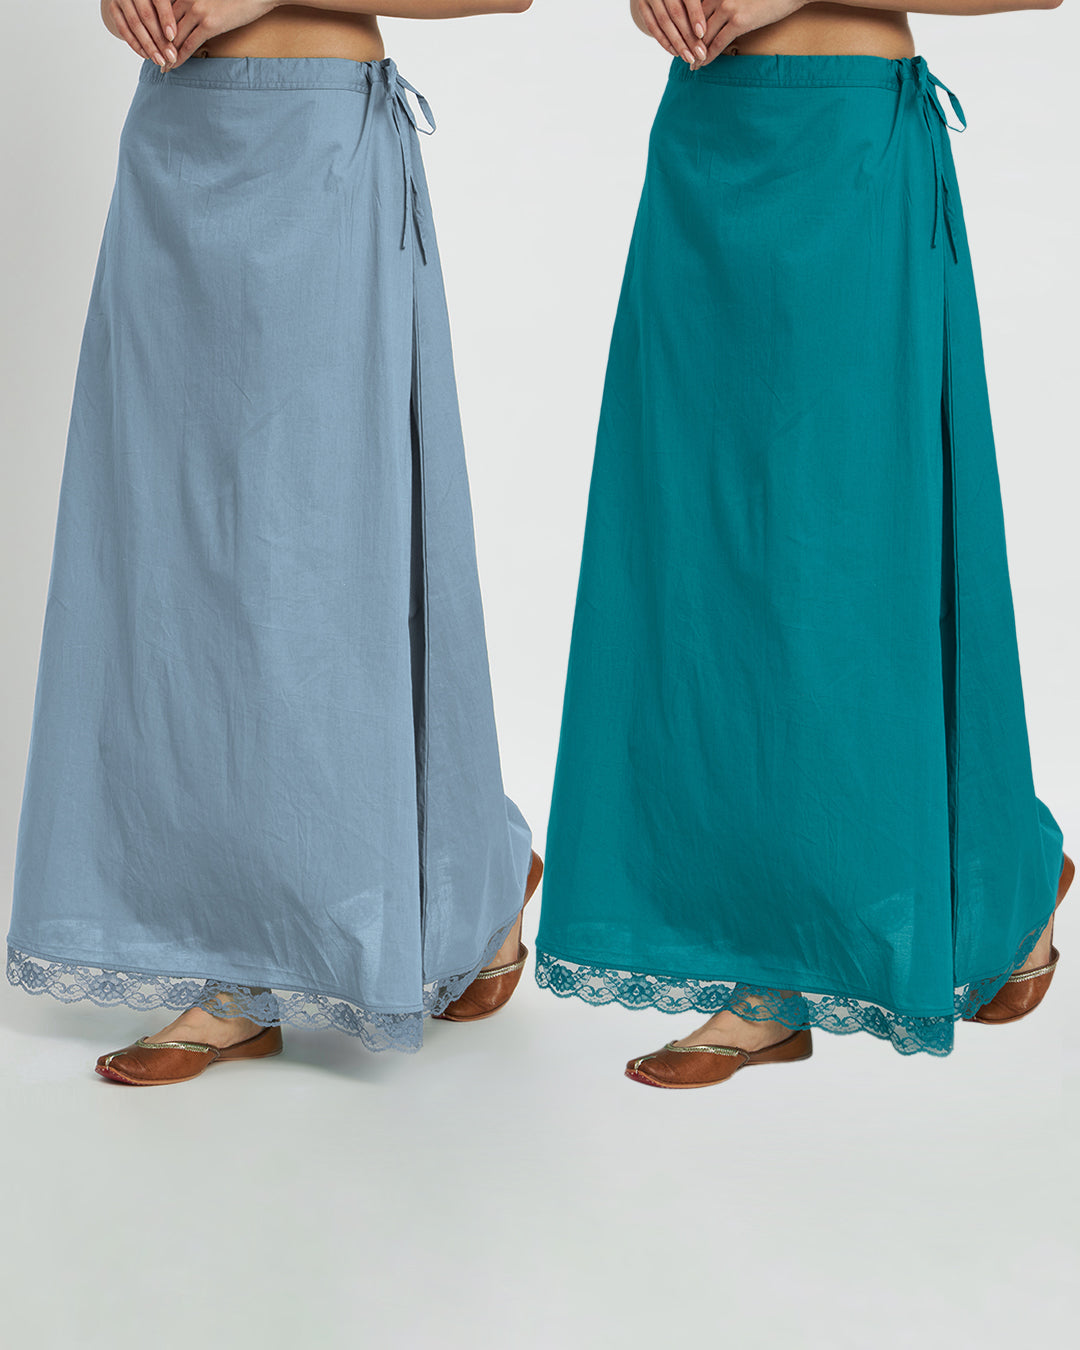 Combo: Blue Dawn & Green Gleam Lace Medley Peekaboo Petticoat- Set of 2